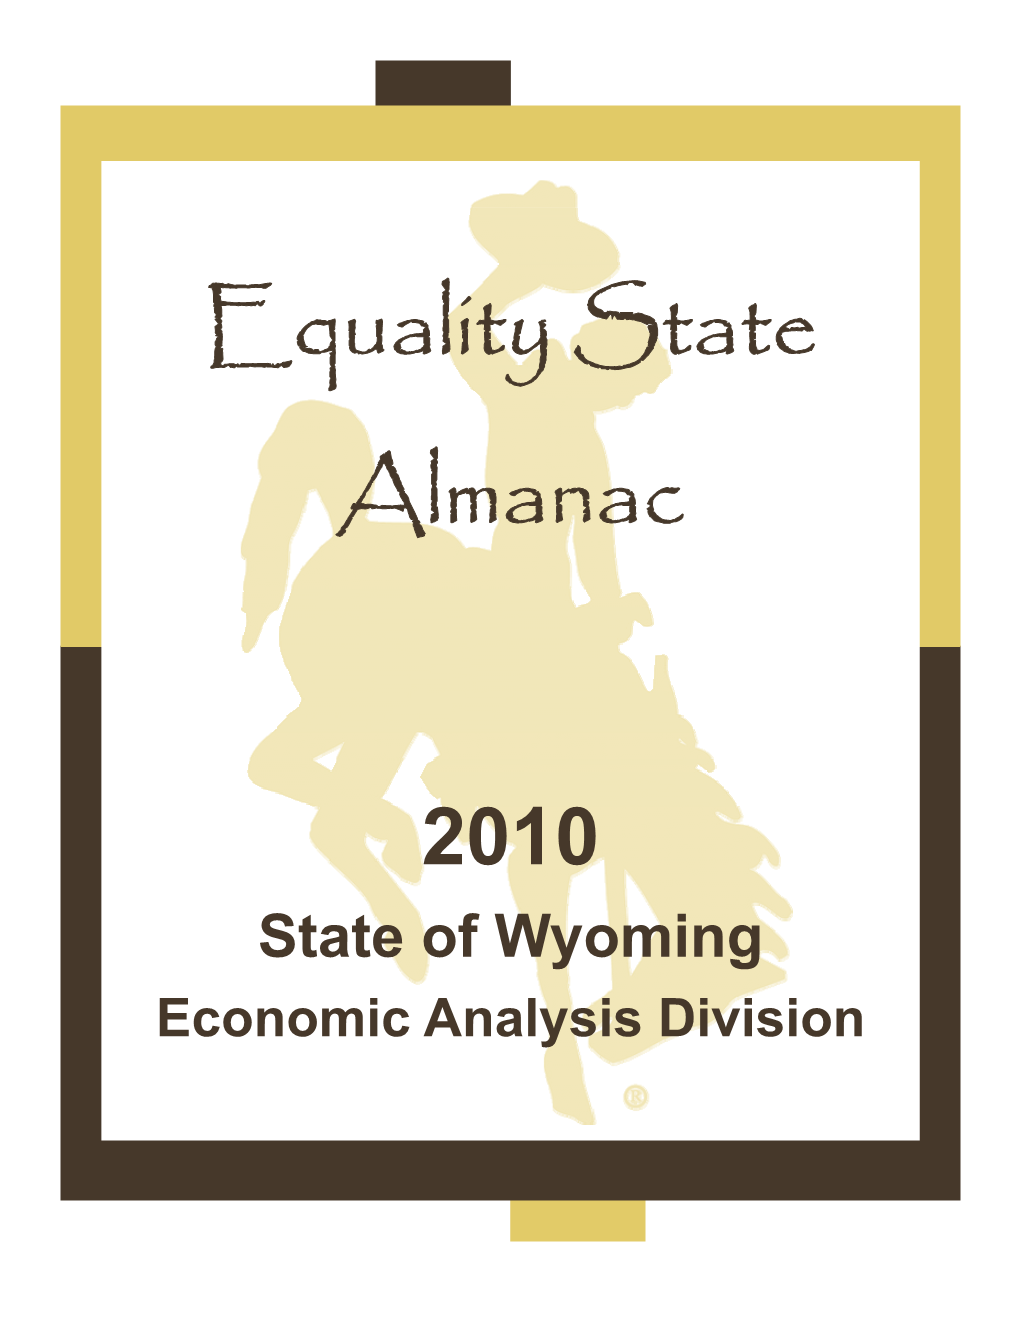 Equality State Almanac 2010